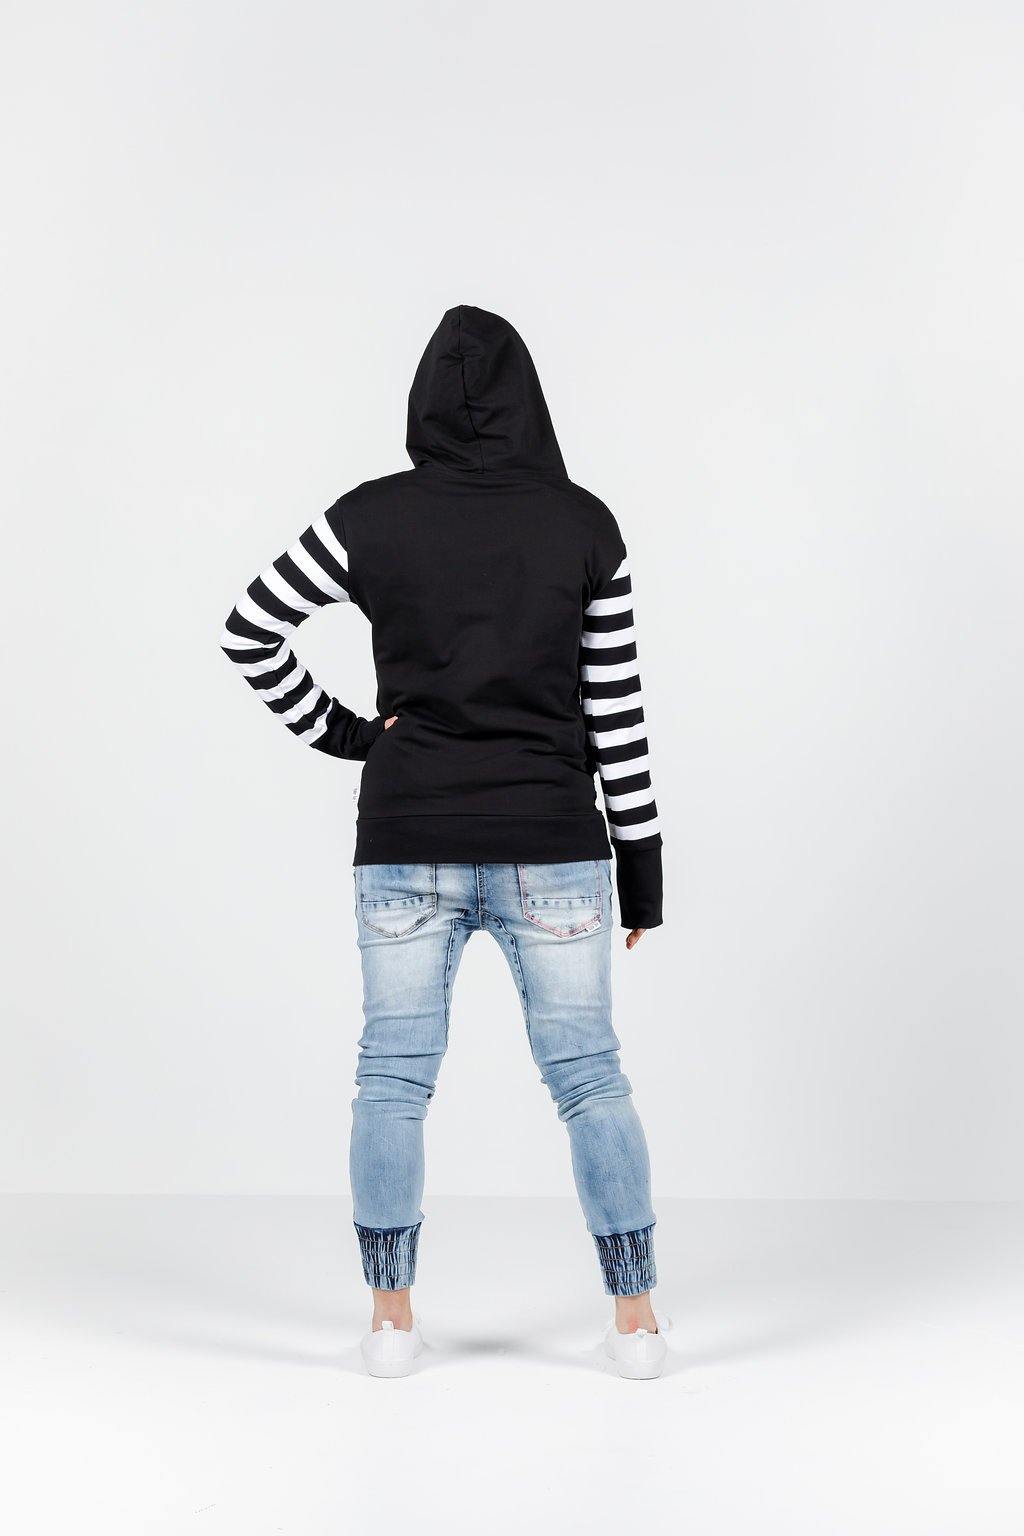 Homelee Hooded Sweatshirt-Black/White - HOMELEE - allaboutagirl